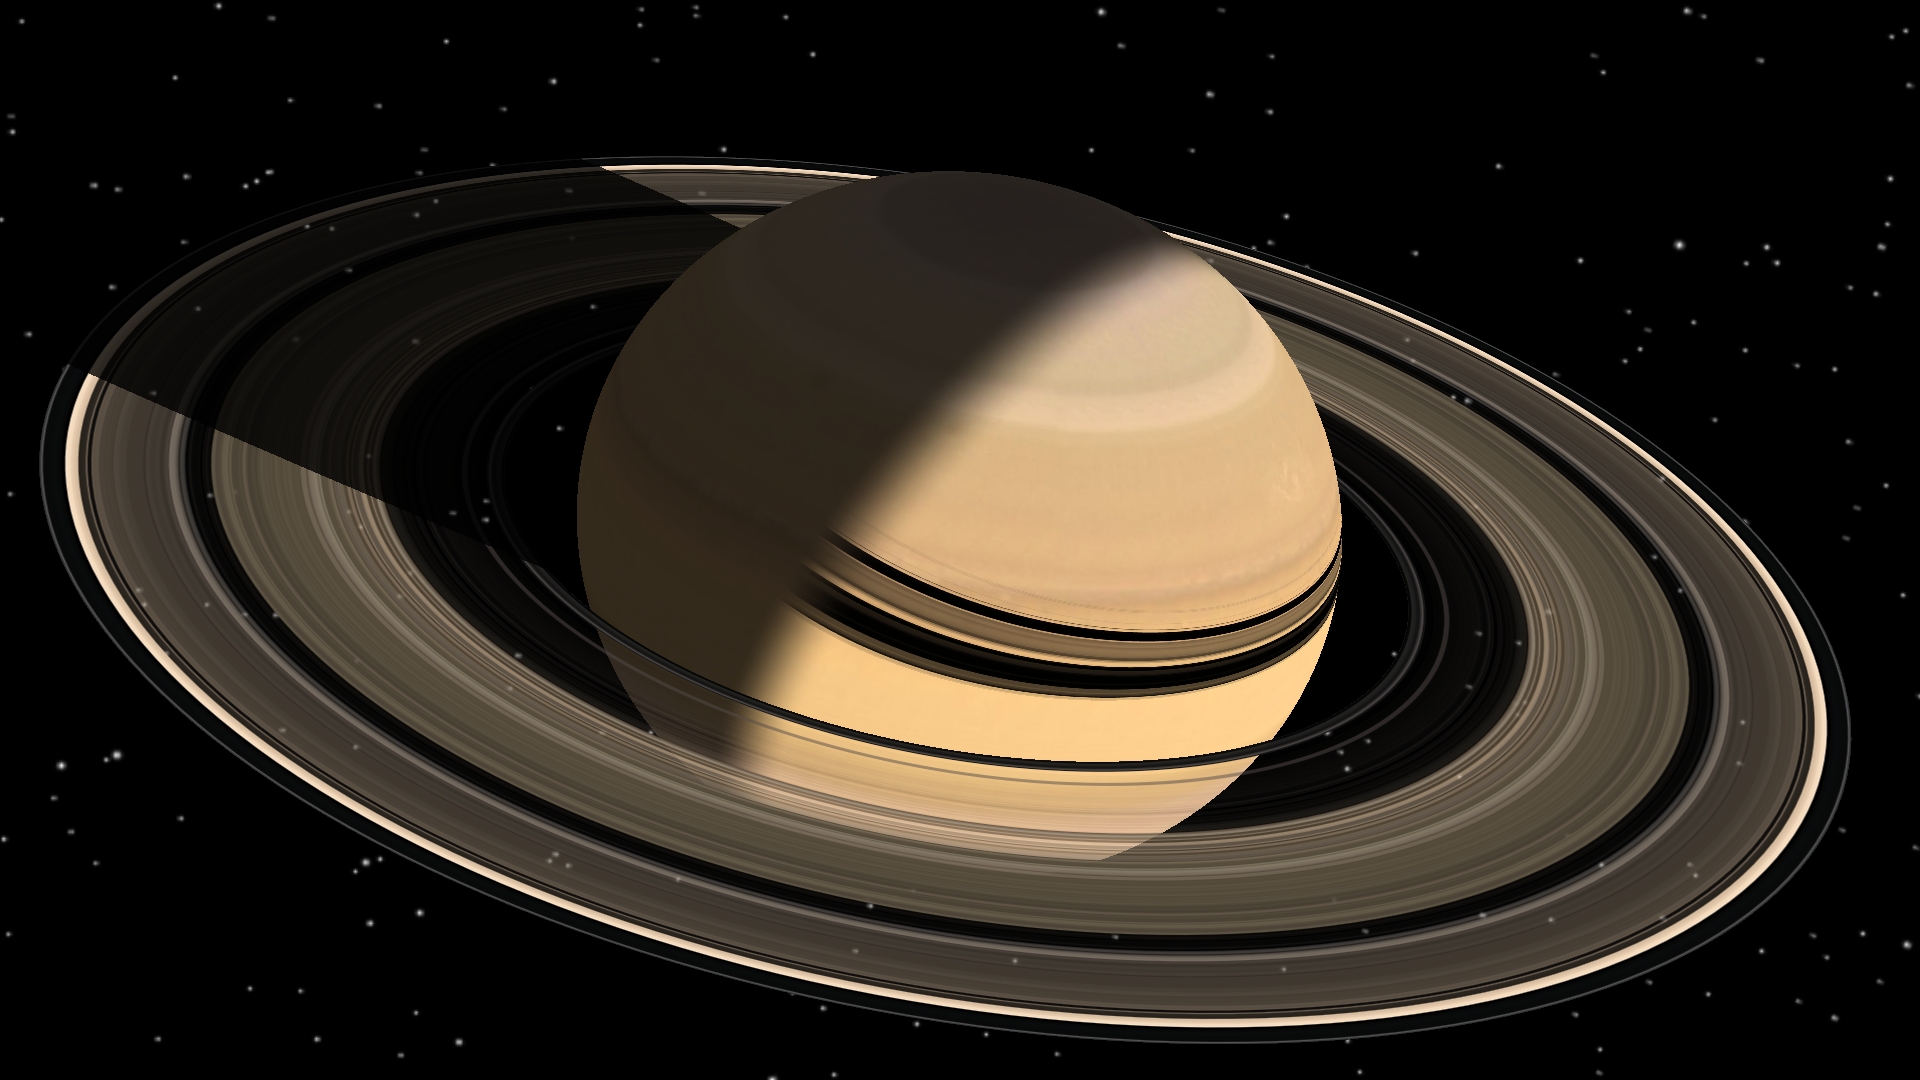 Saturn rings photo